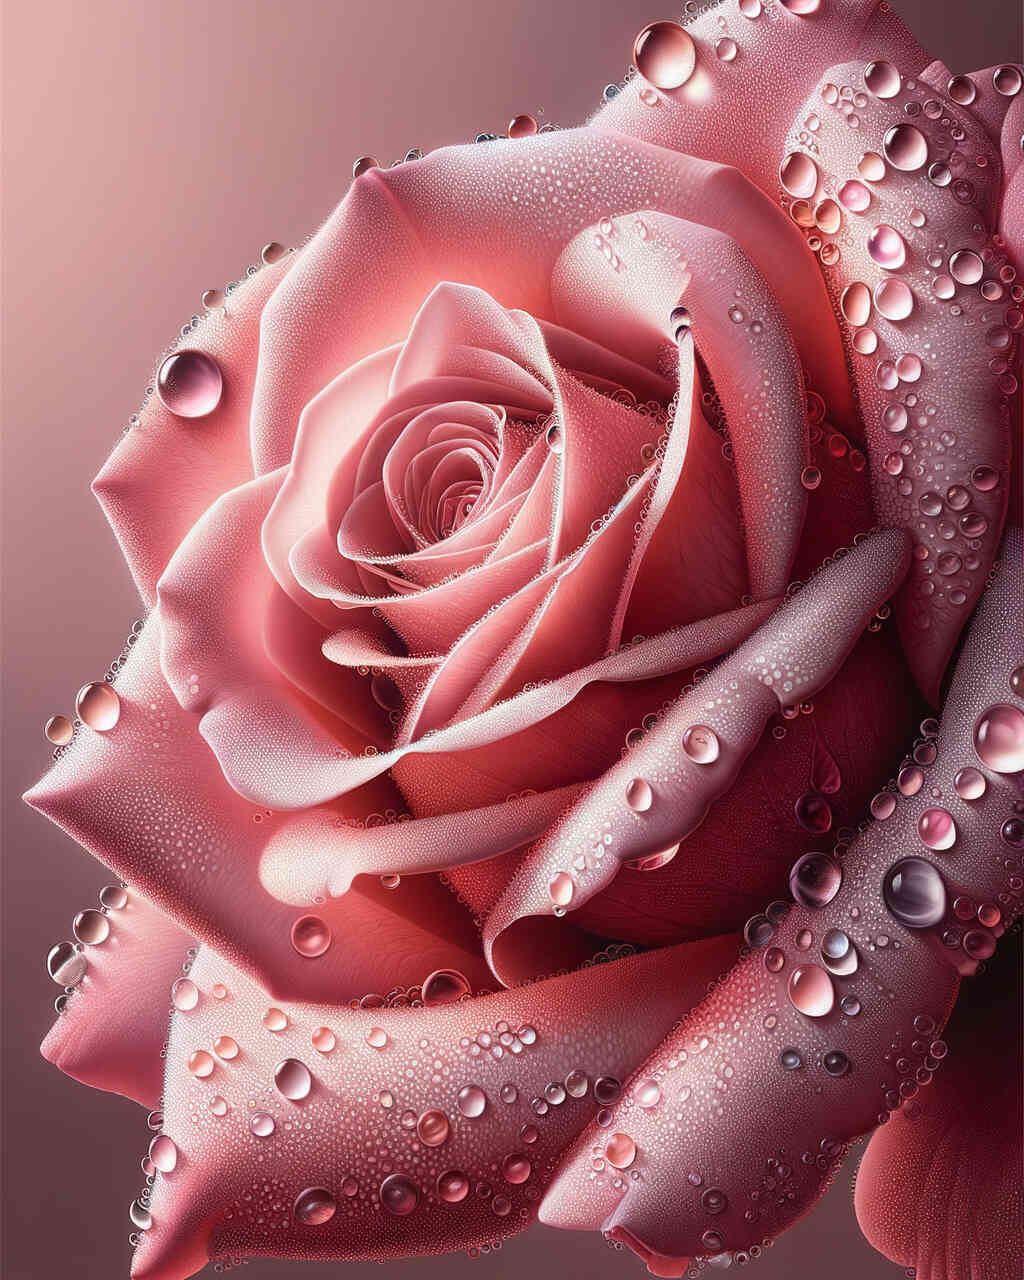 Diamond Painting - Rosa Rose, Wassertropfen